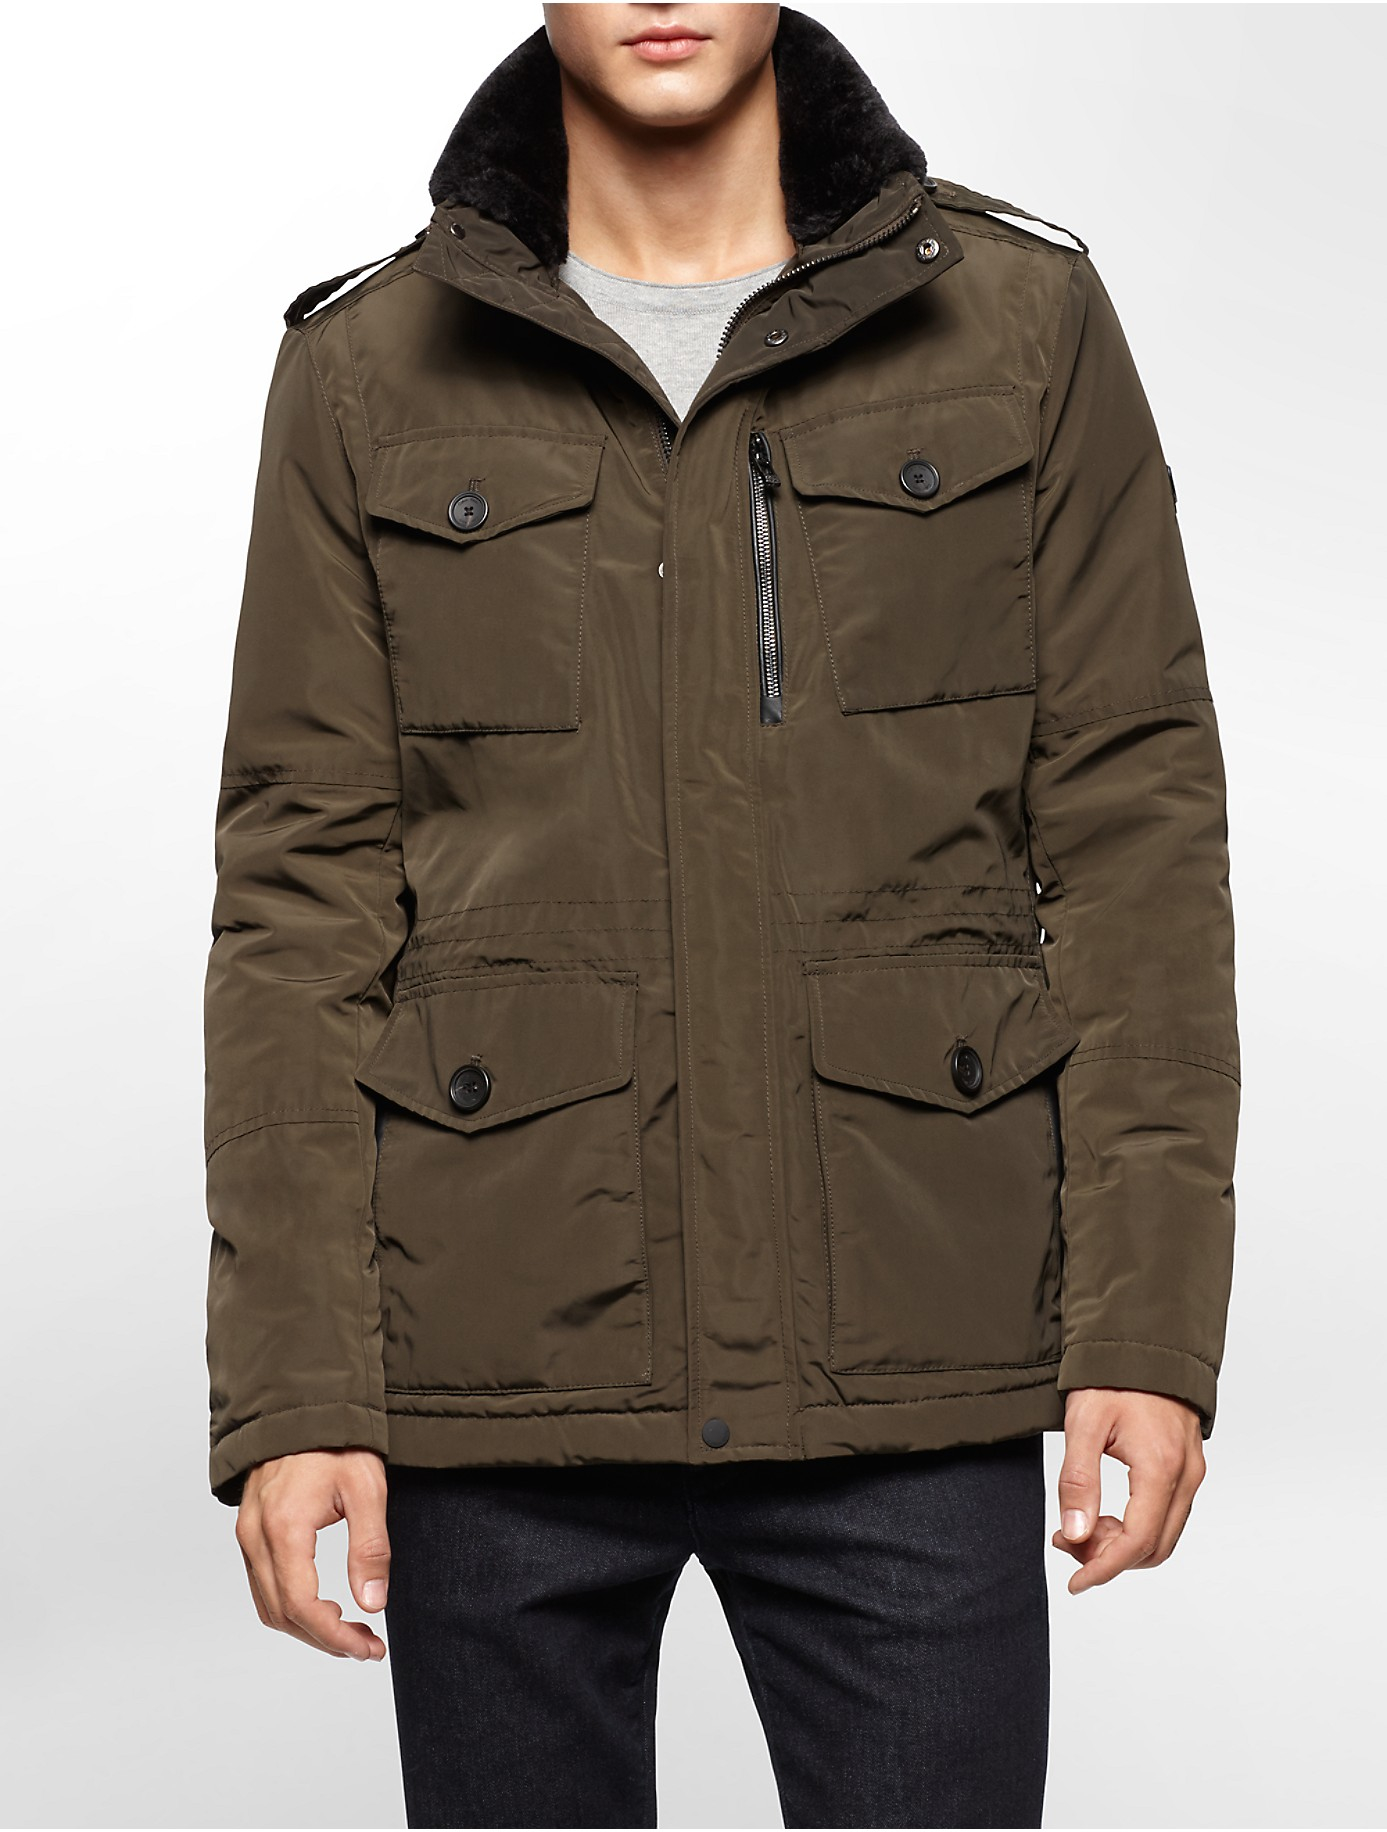 Lyst - Calvin Klein White Label Faux Fur Collar Military Jacket in ...